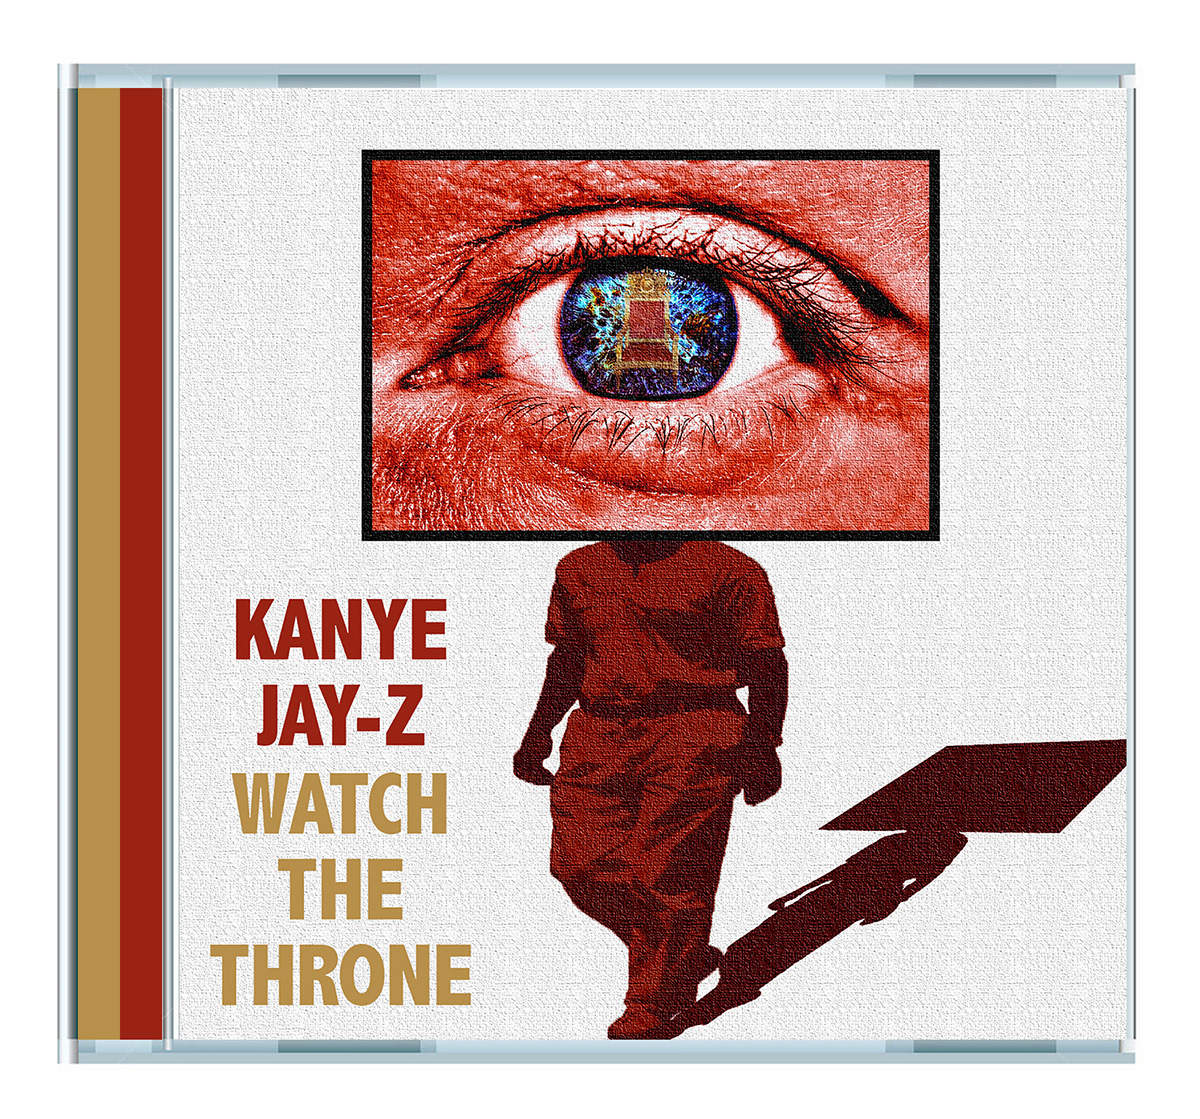 Alternative Album Covers matt hodin kid cudi mac miller Wale Jay Z Kanye West j. cole music design album covers #madethis 